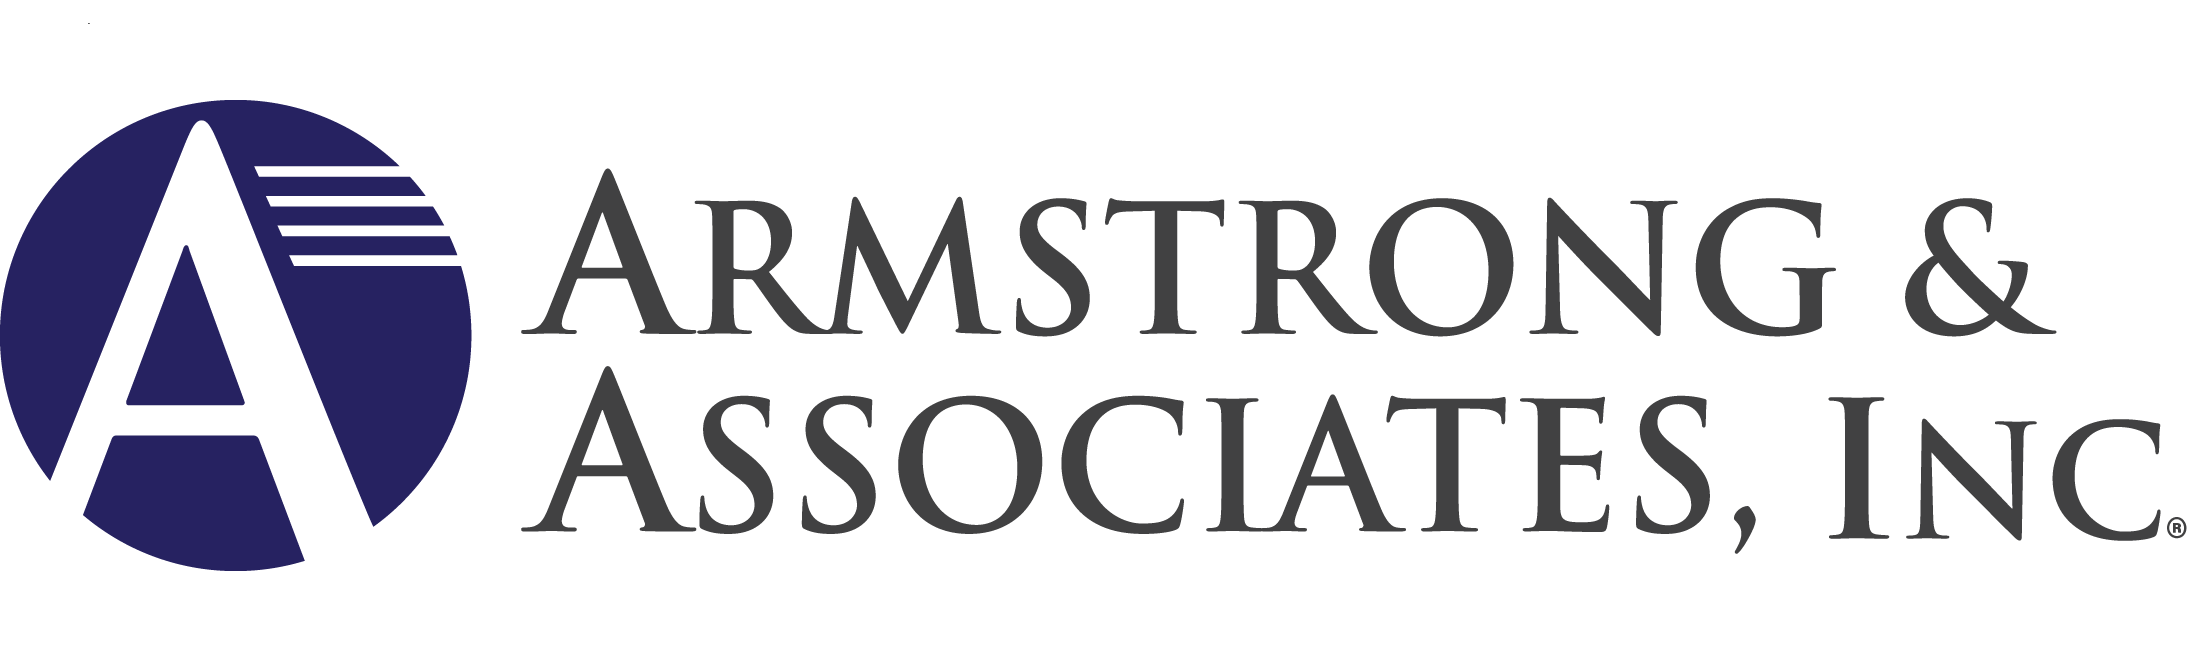 Armstrong incorporated. Mercury-Associates-Inc-. HK Associates Inc.